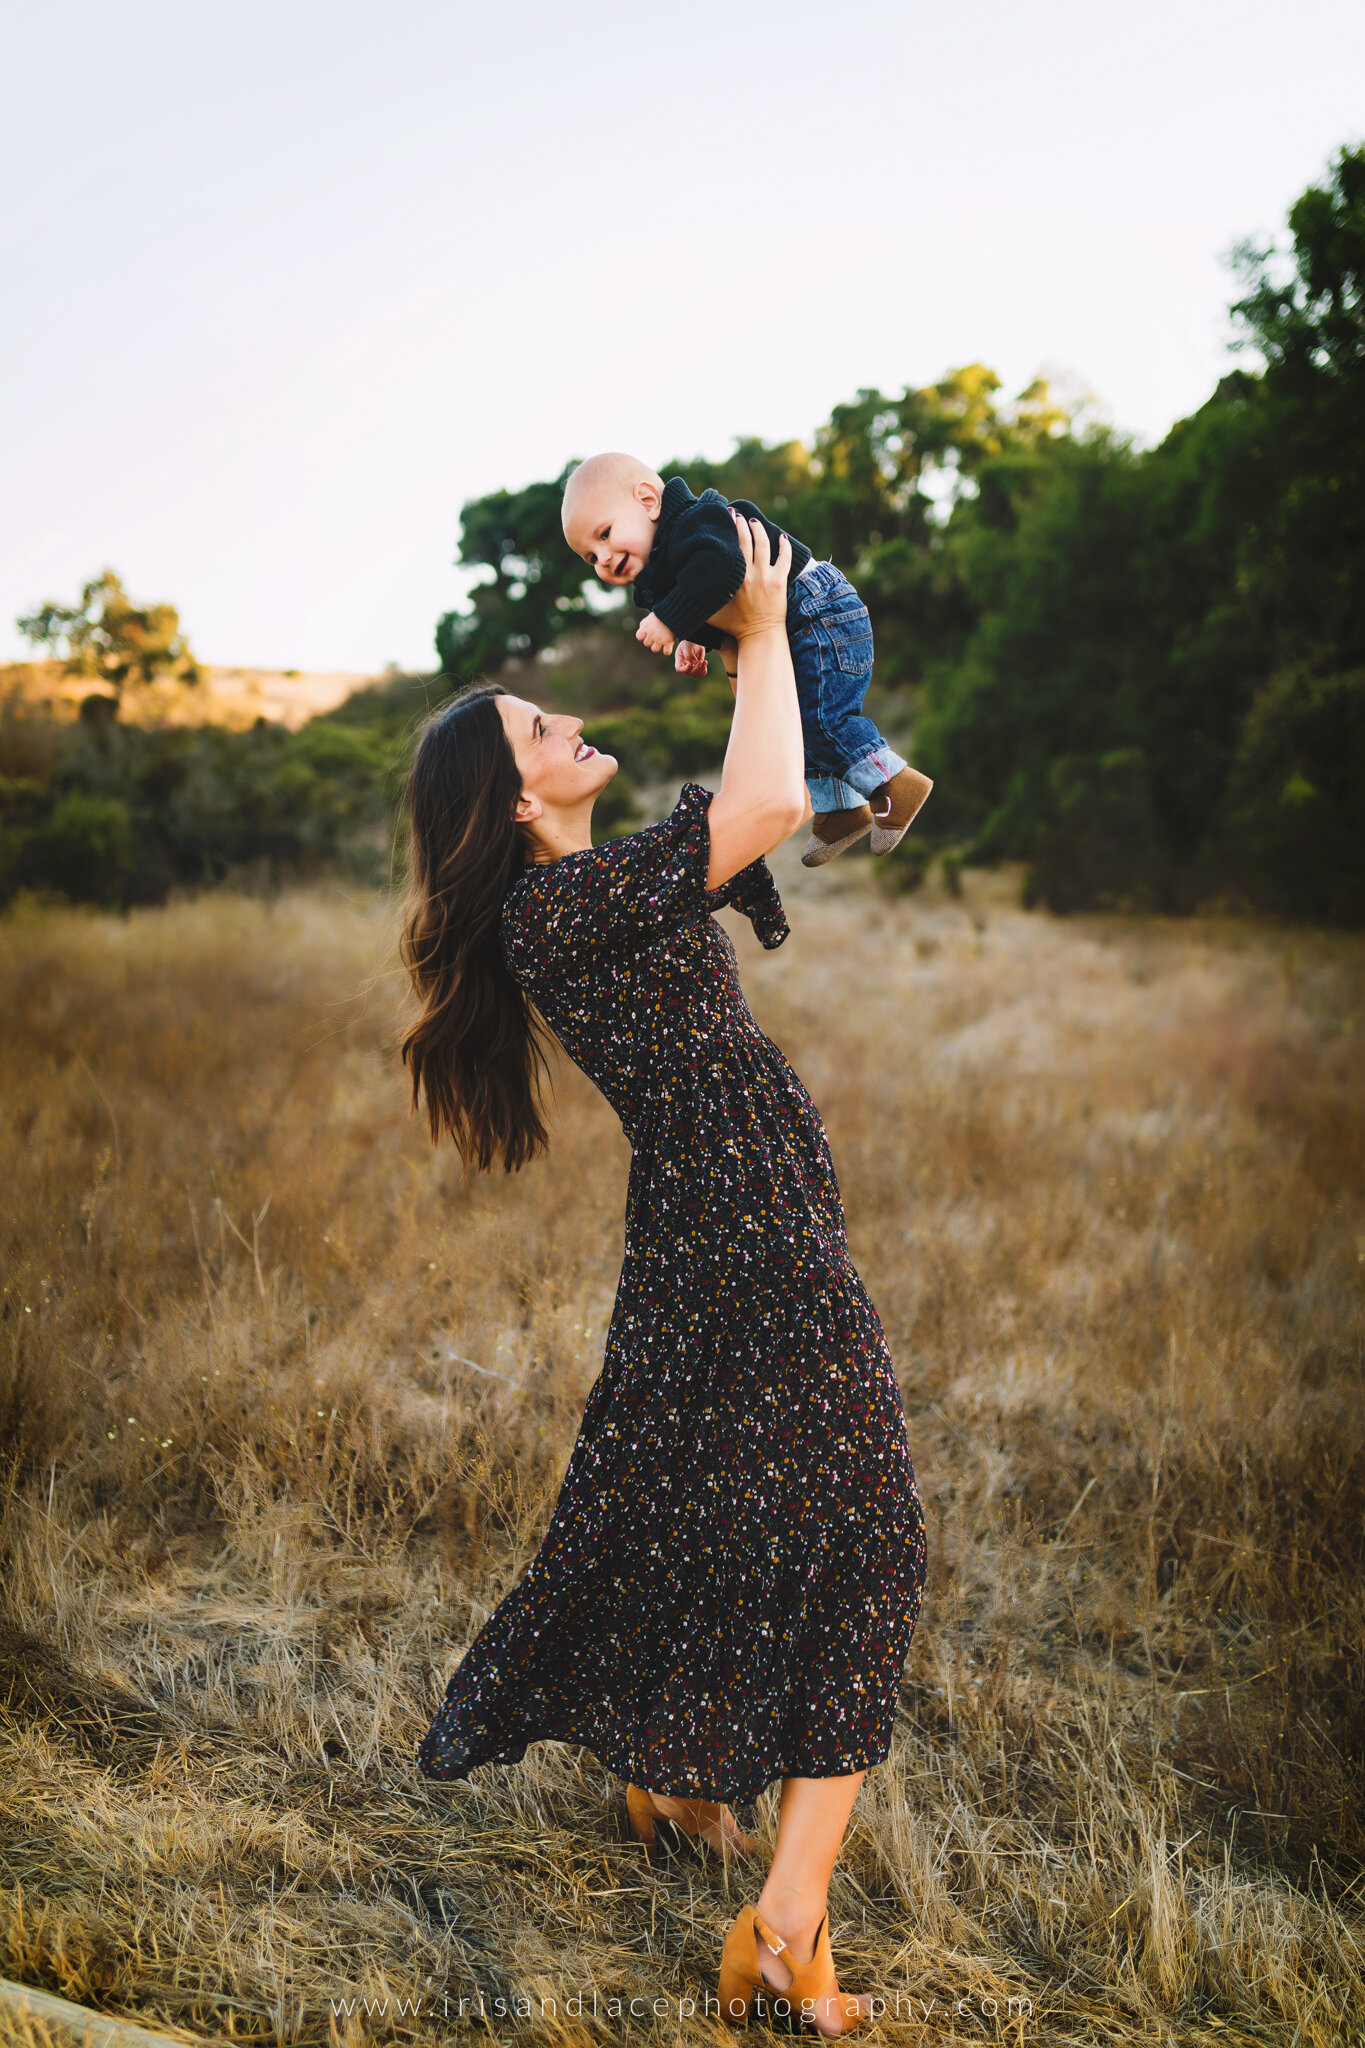 Palo Alto Family Photography  |  Iris and Lace Photography